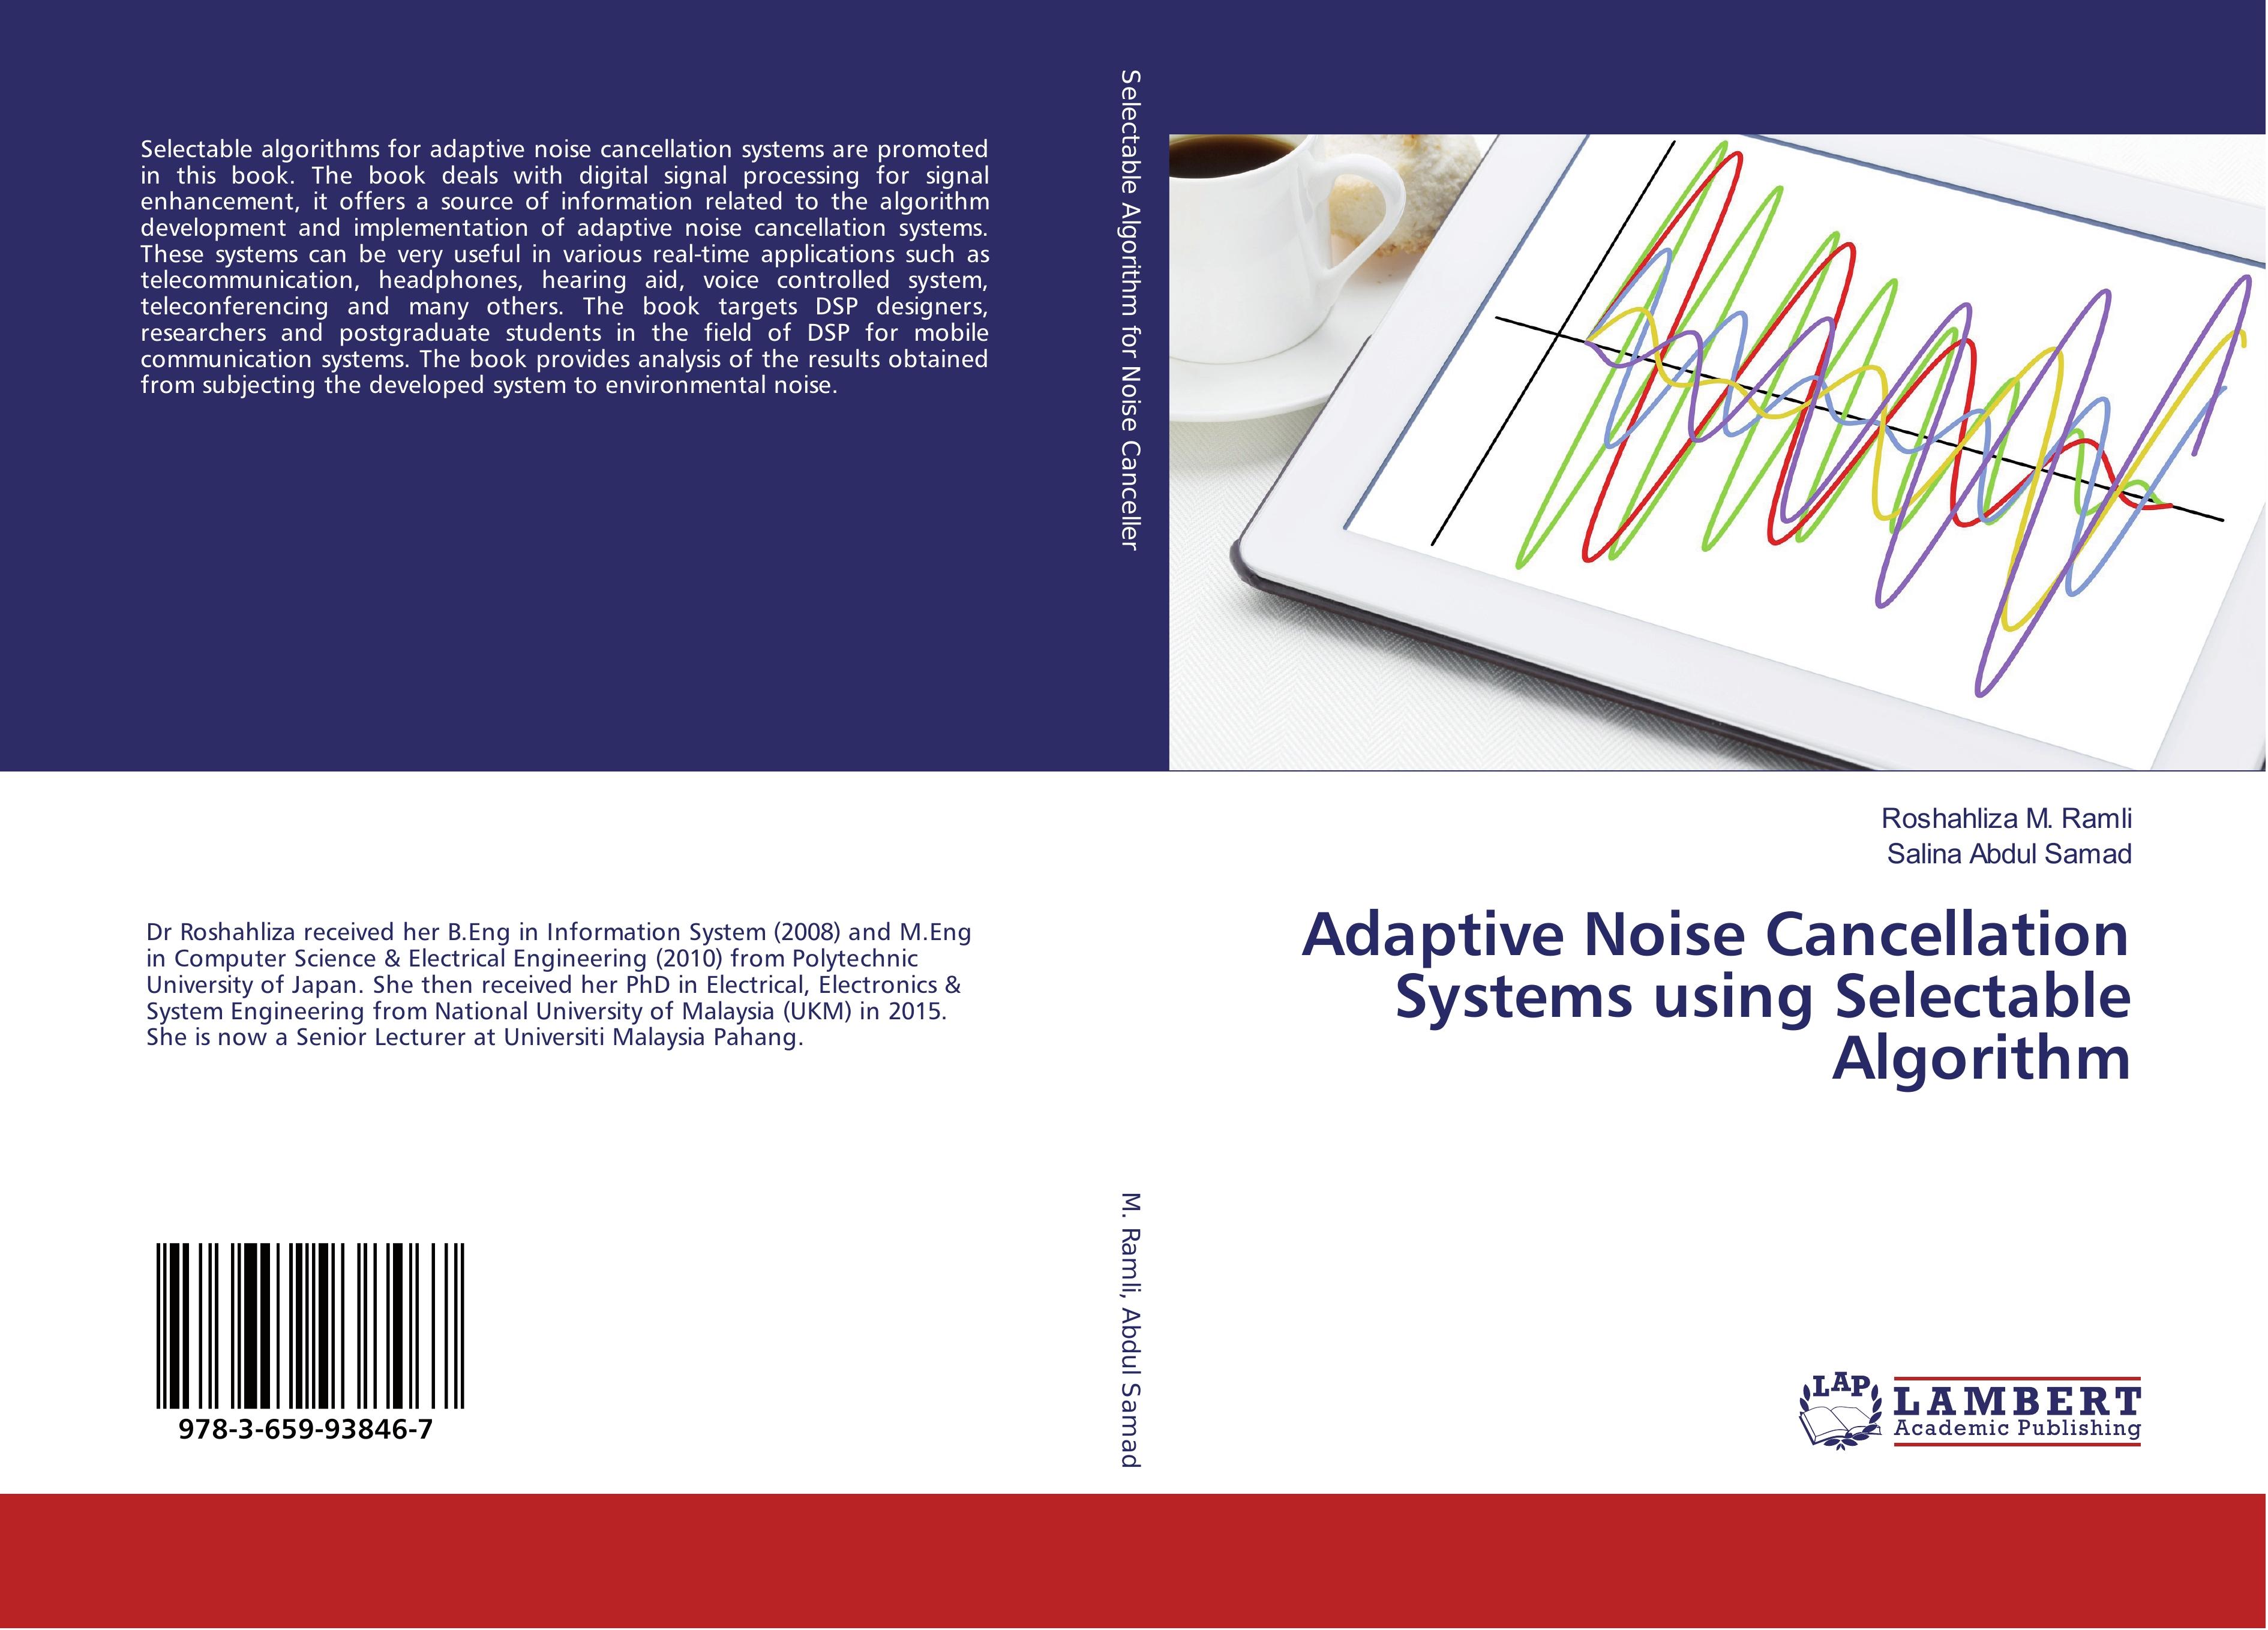 Adaptive Noise Cancellation Systems using Selectable Algorithm - Ramli, Roshahliza M. Abdul Samad, Salina